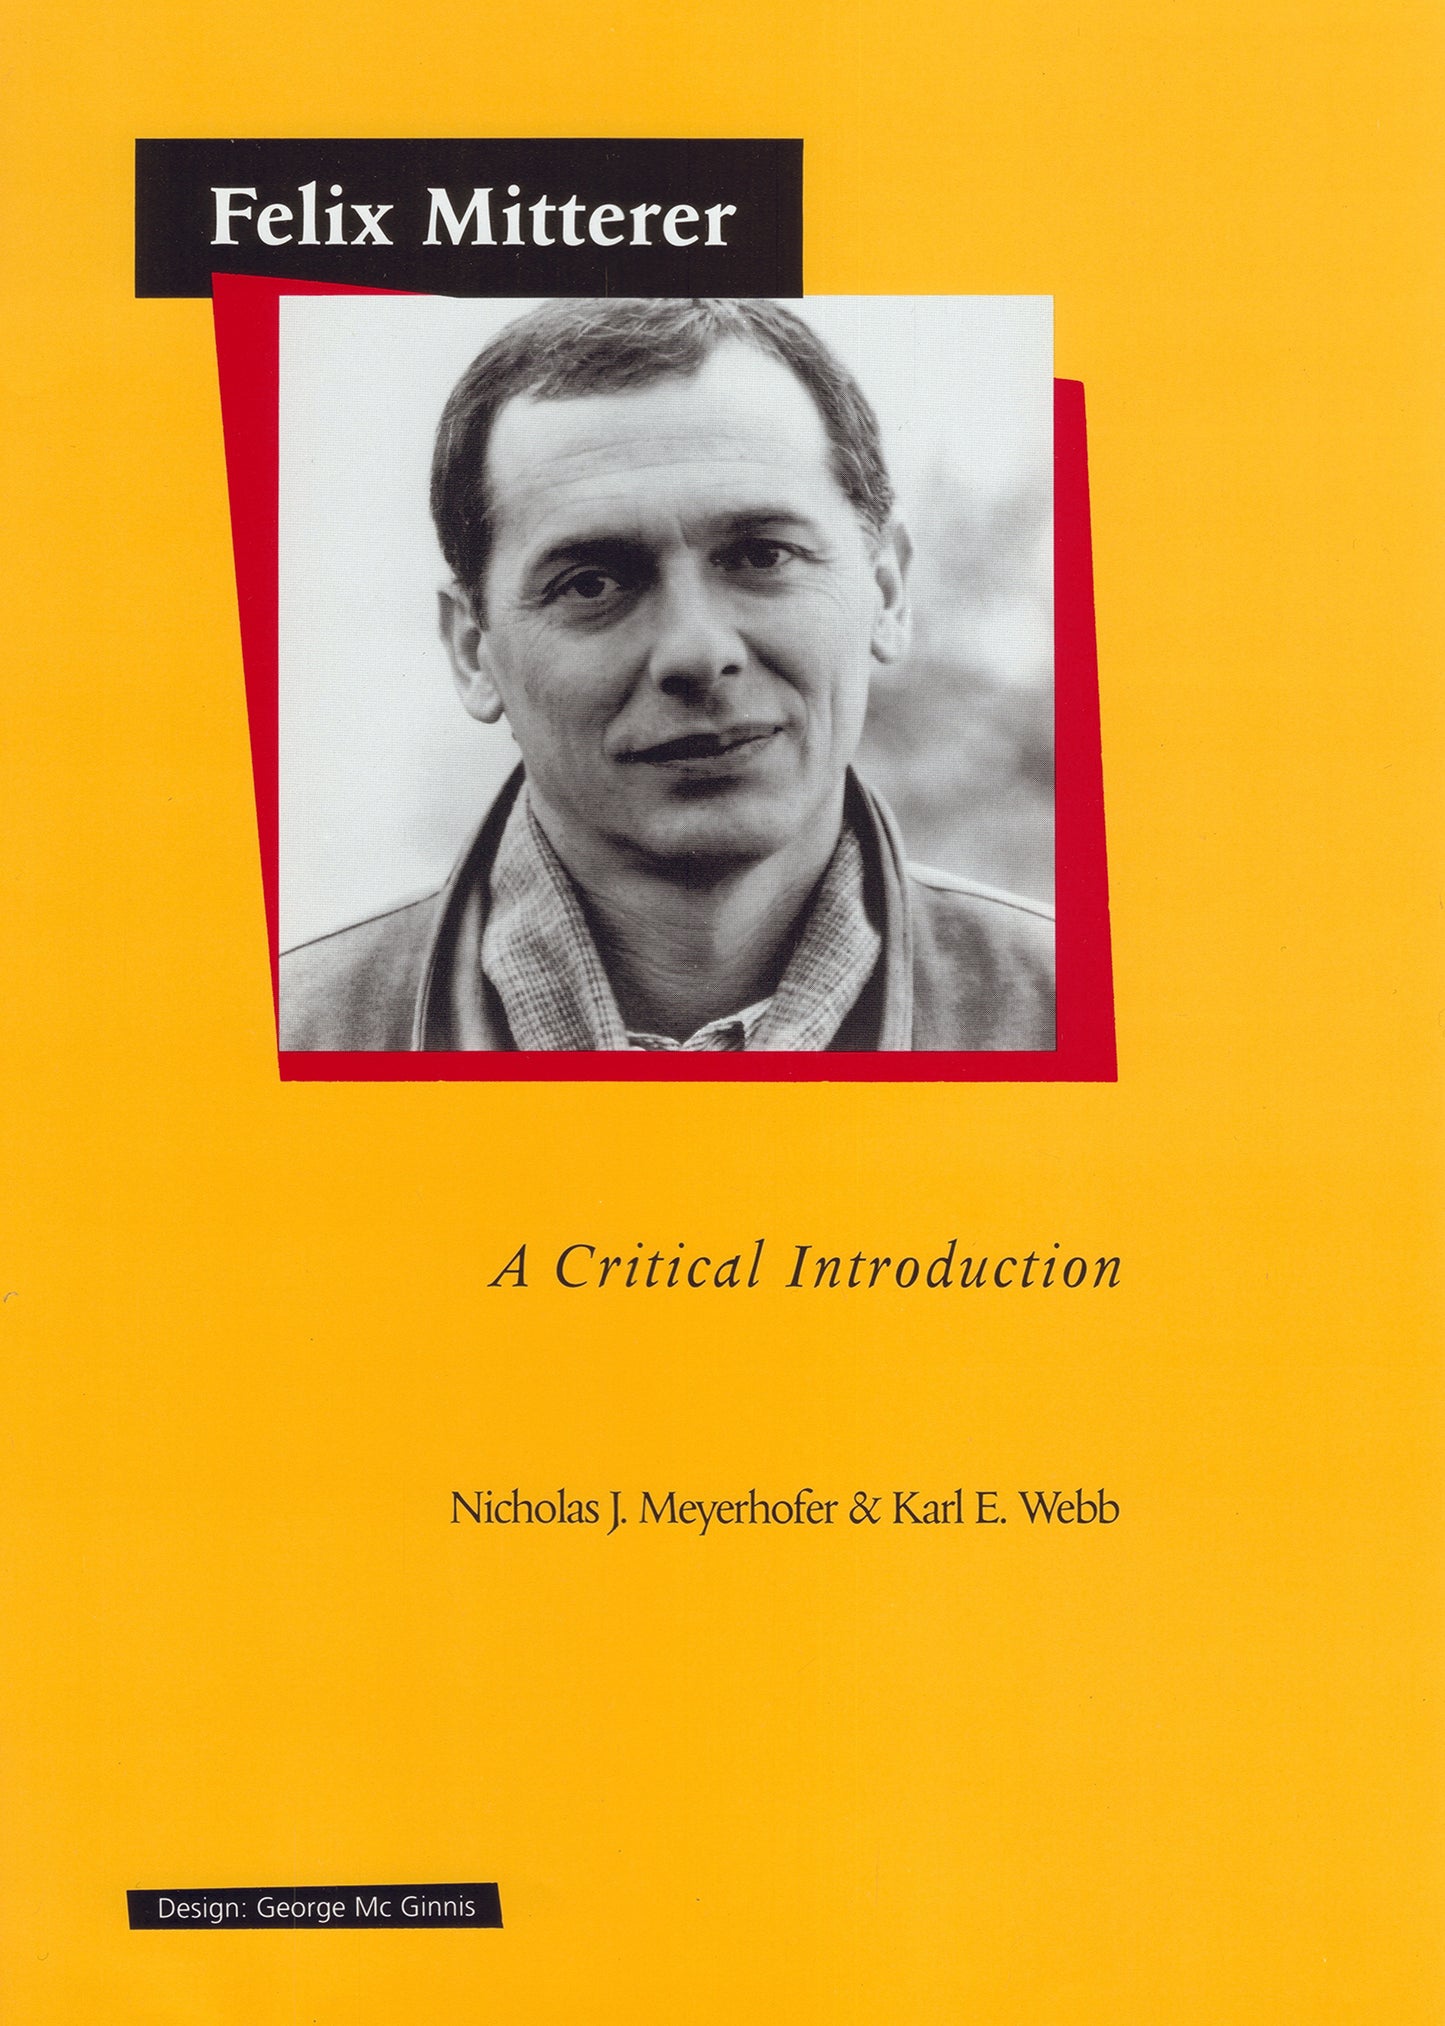 Felix Mitterer: A Critical Introduction By Nicholas J. Meyerhofer and Karl E. Webb